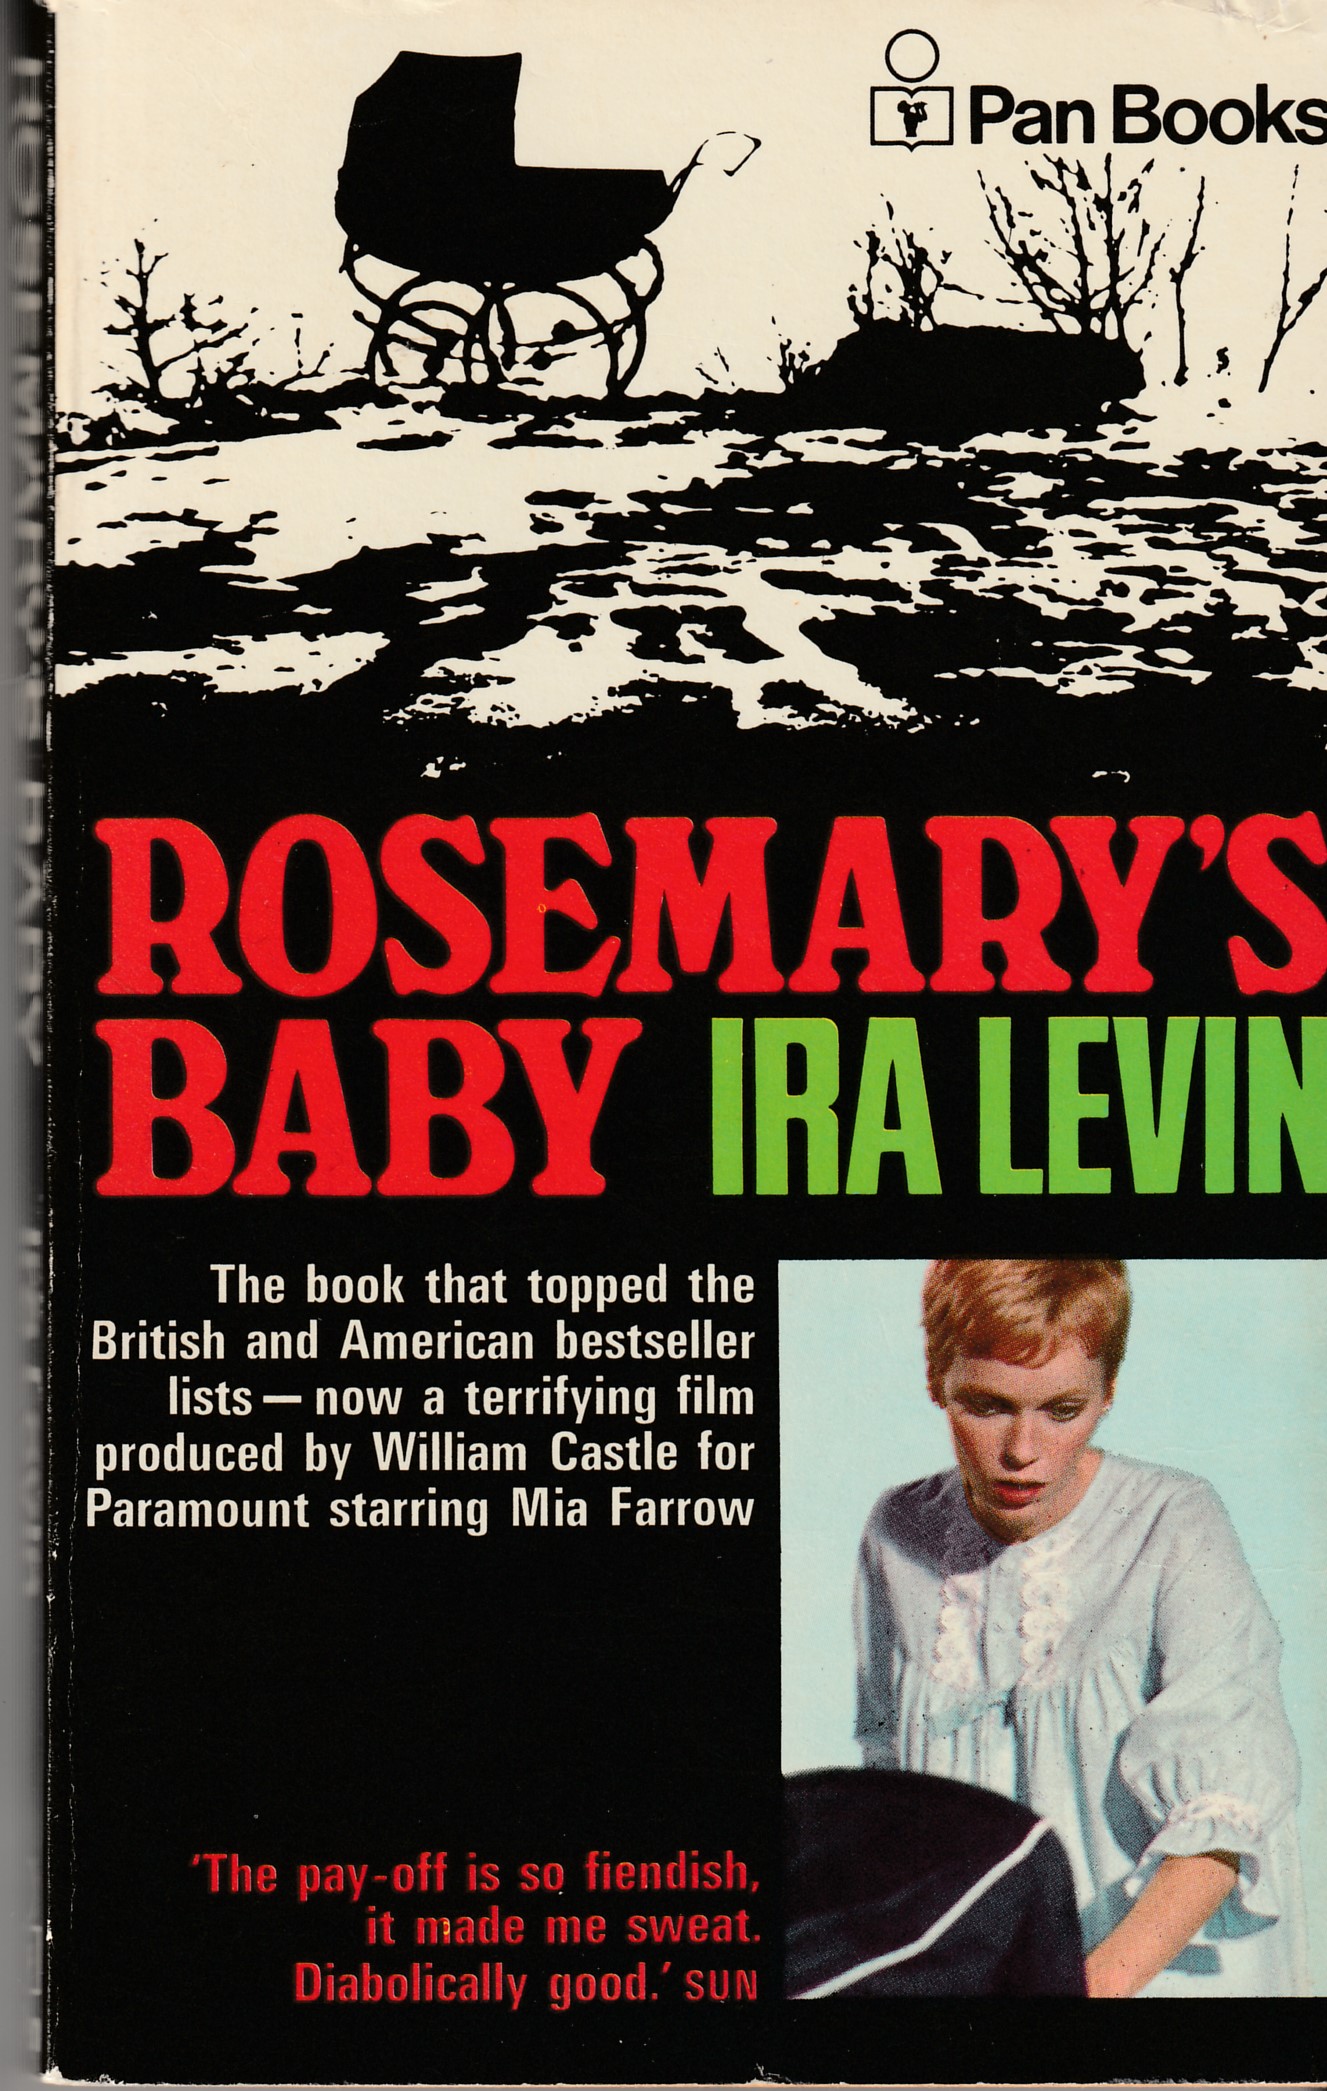 LEVIN, IRA - Rosemary's Baby